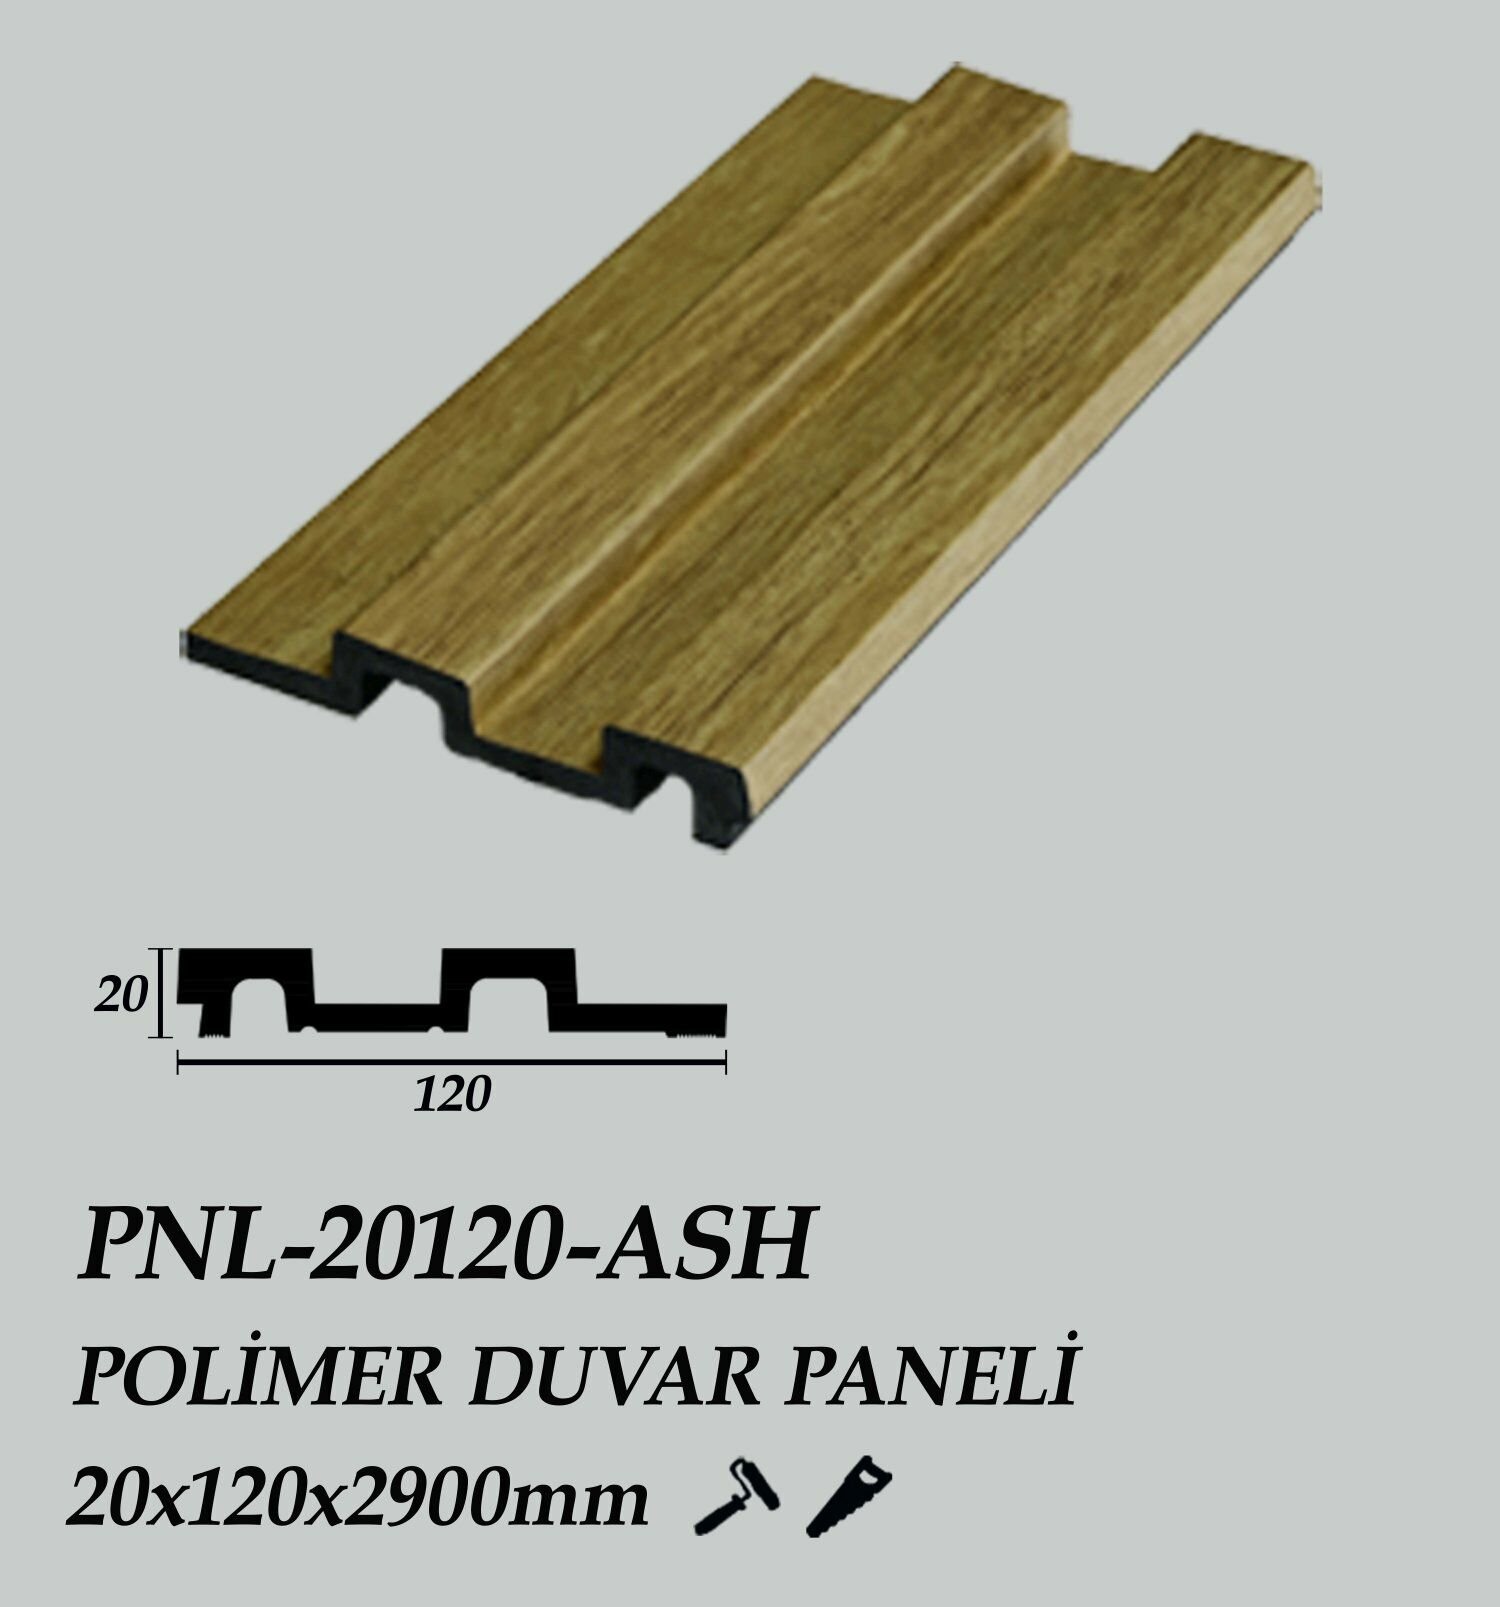 PNL-20120-ASH Polimer Duvar Paneli 20X120X2900mm